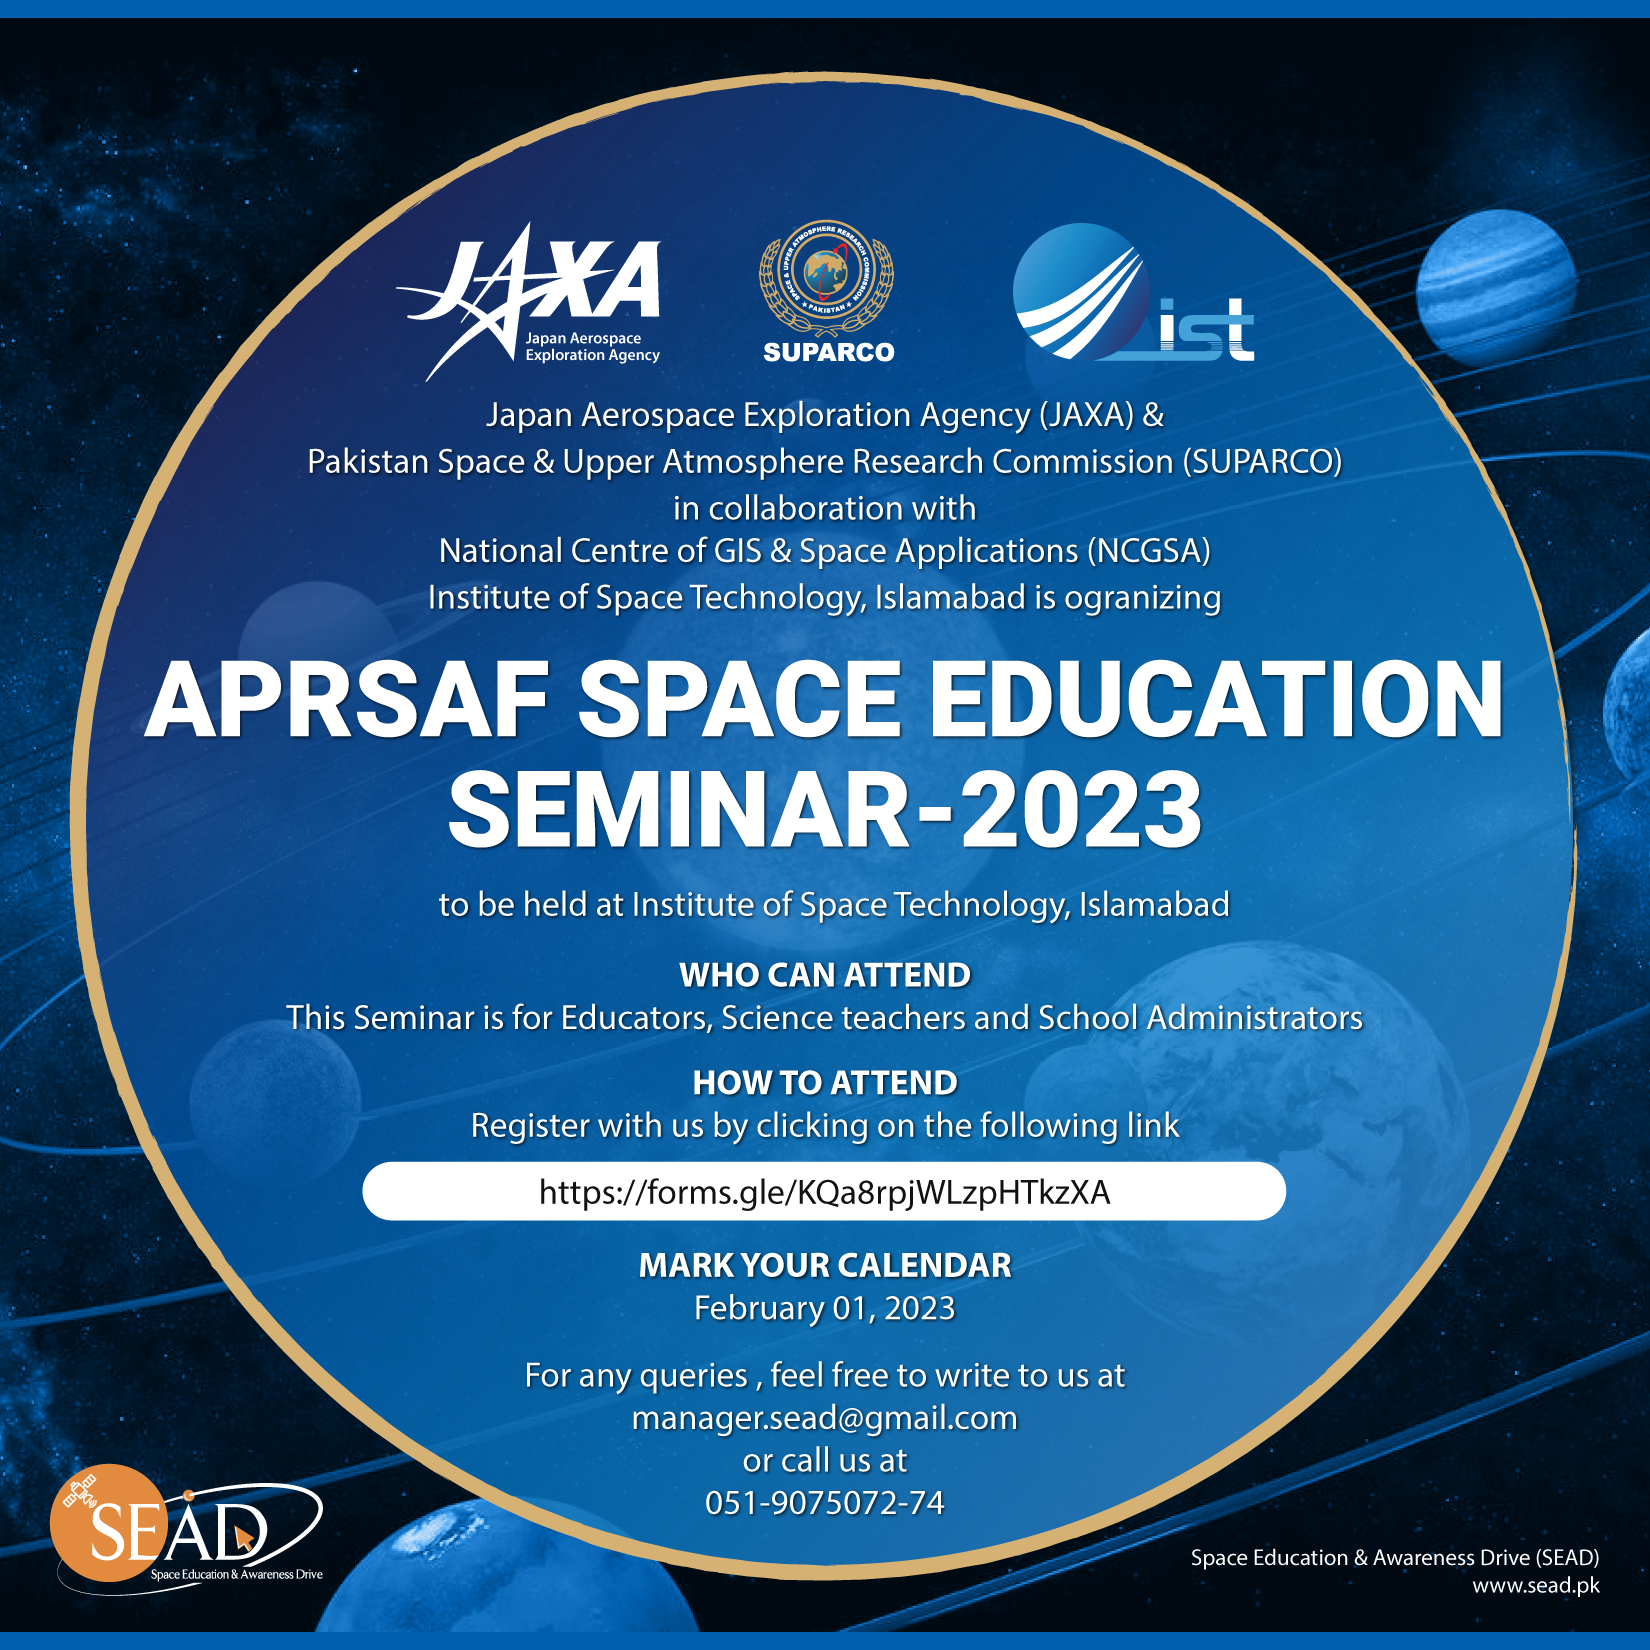 APRSAF Space Education Seminar 2023 to be held in February